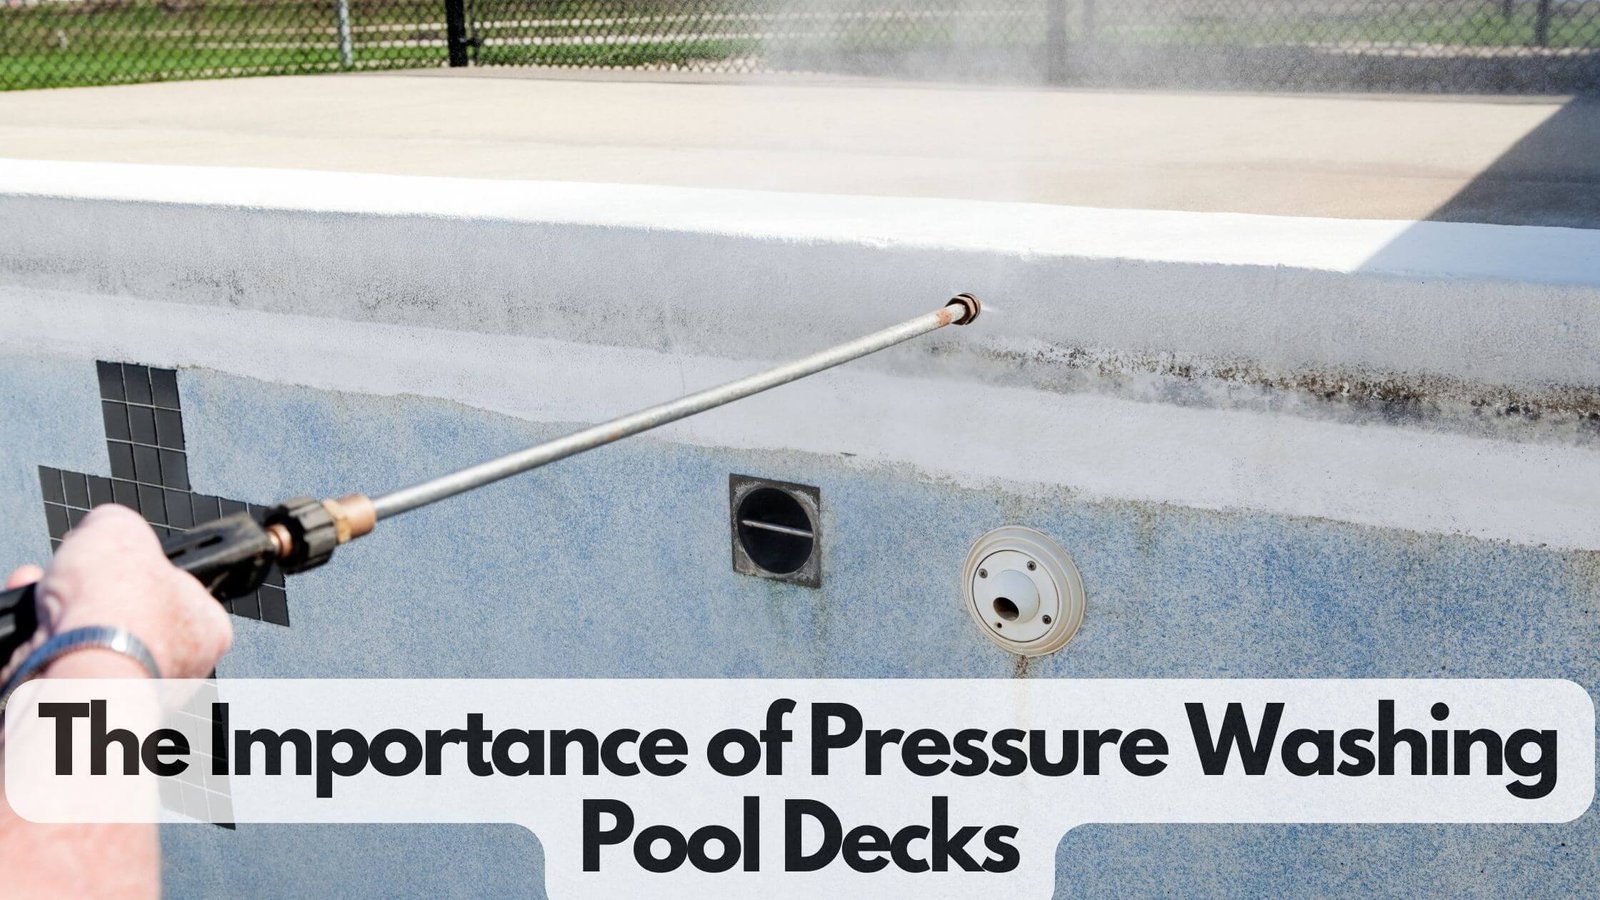 The Importance of Pressure Washing Pool Decks